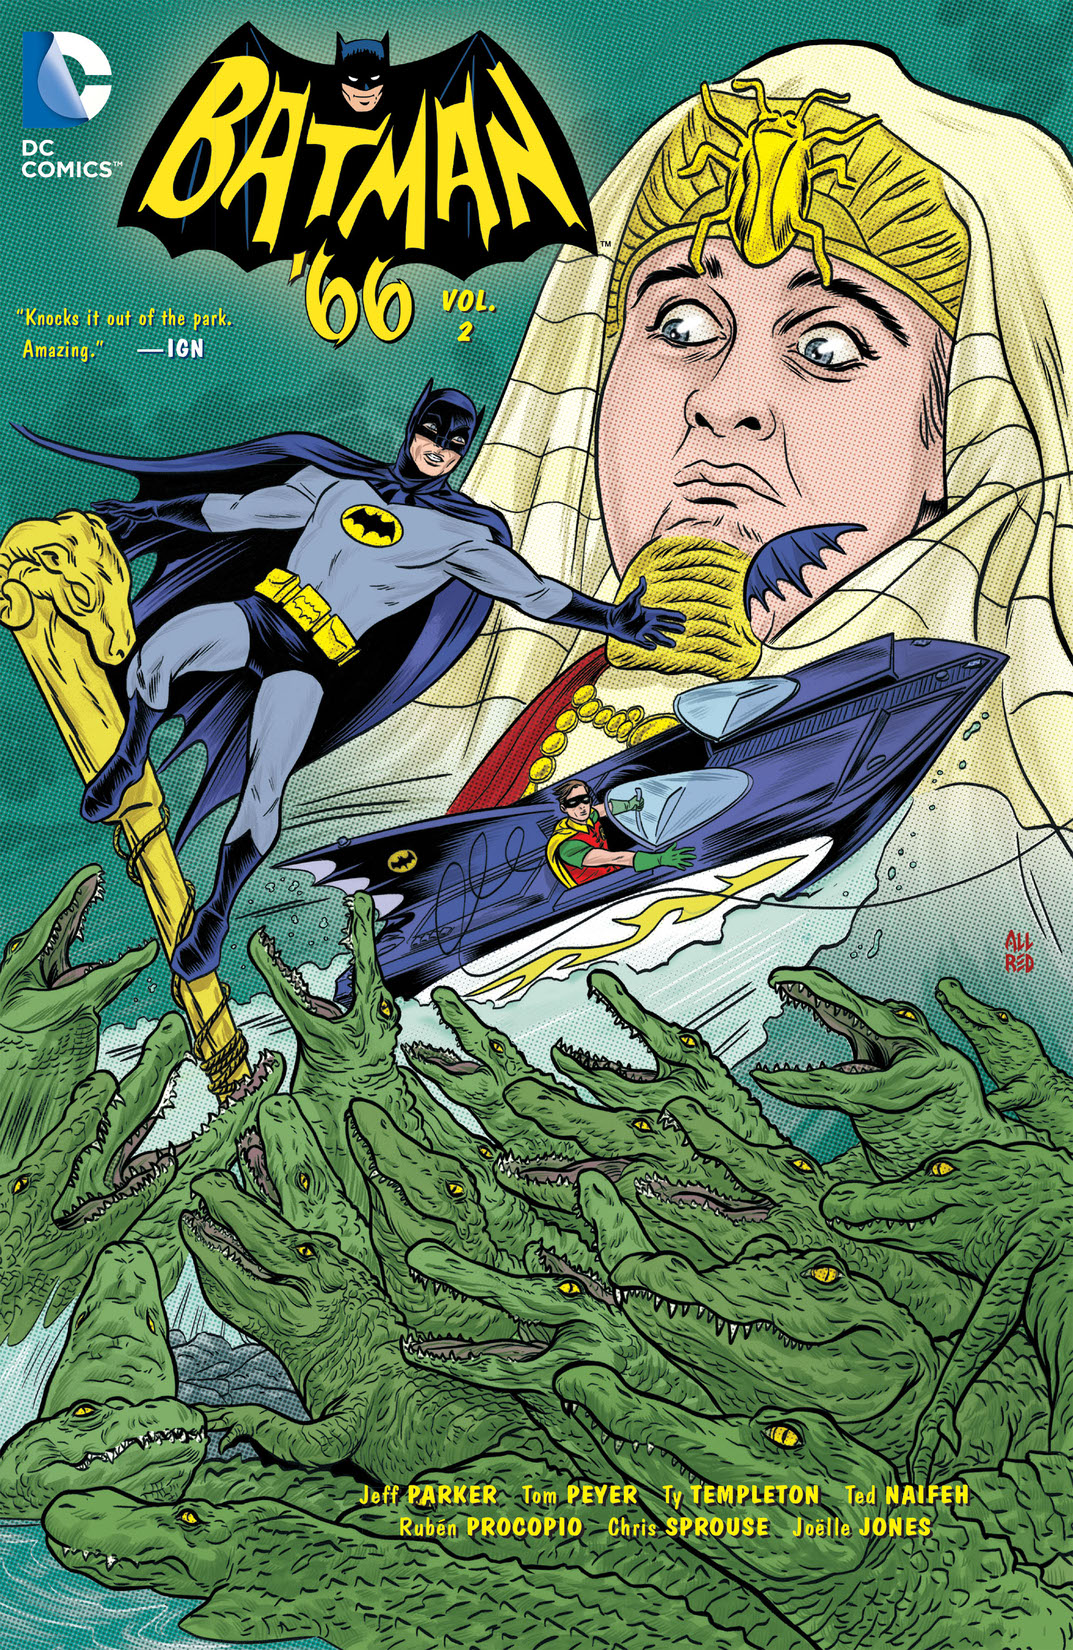 Batman '66 Vol. 2 preview images